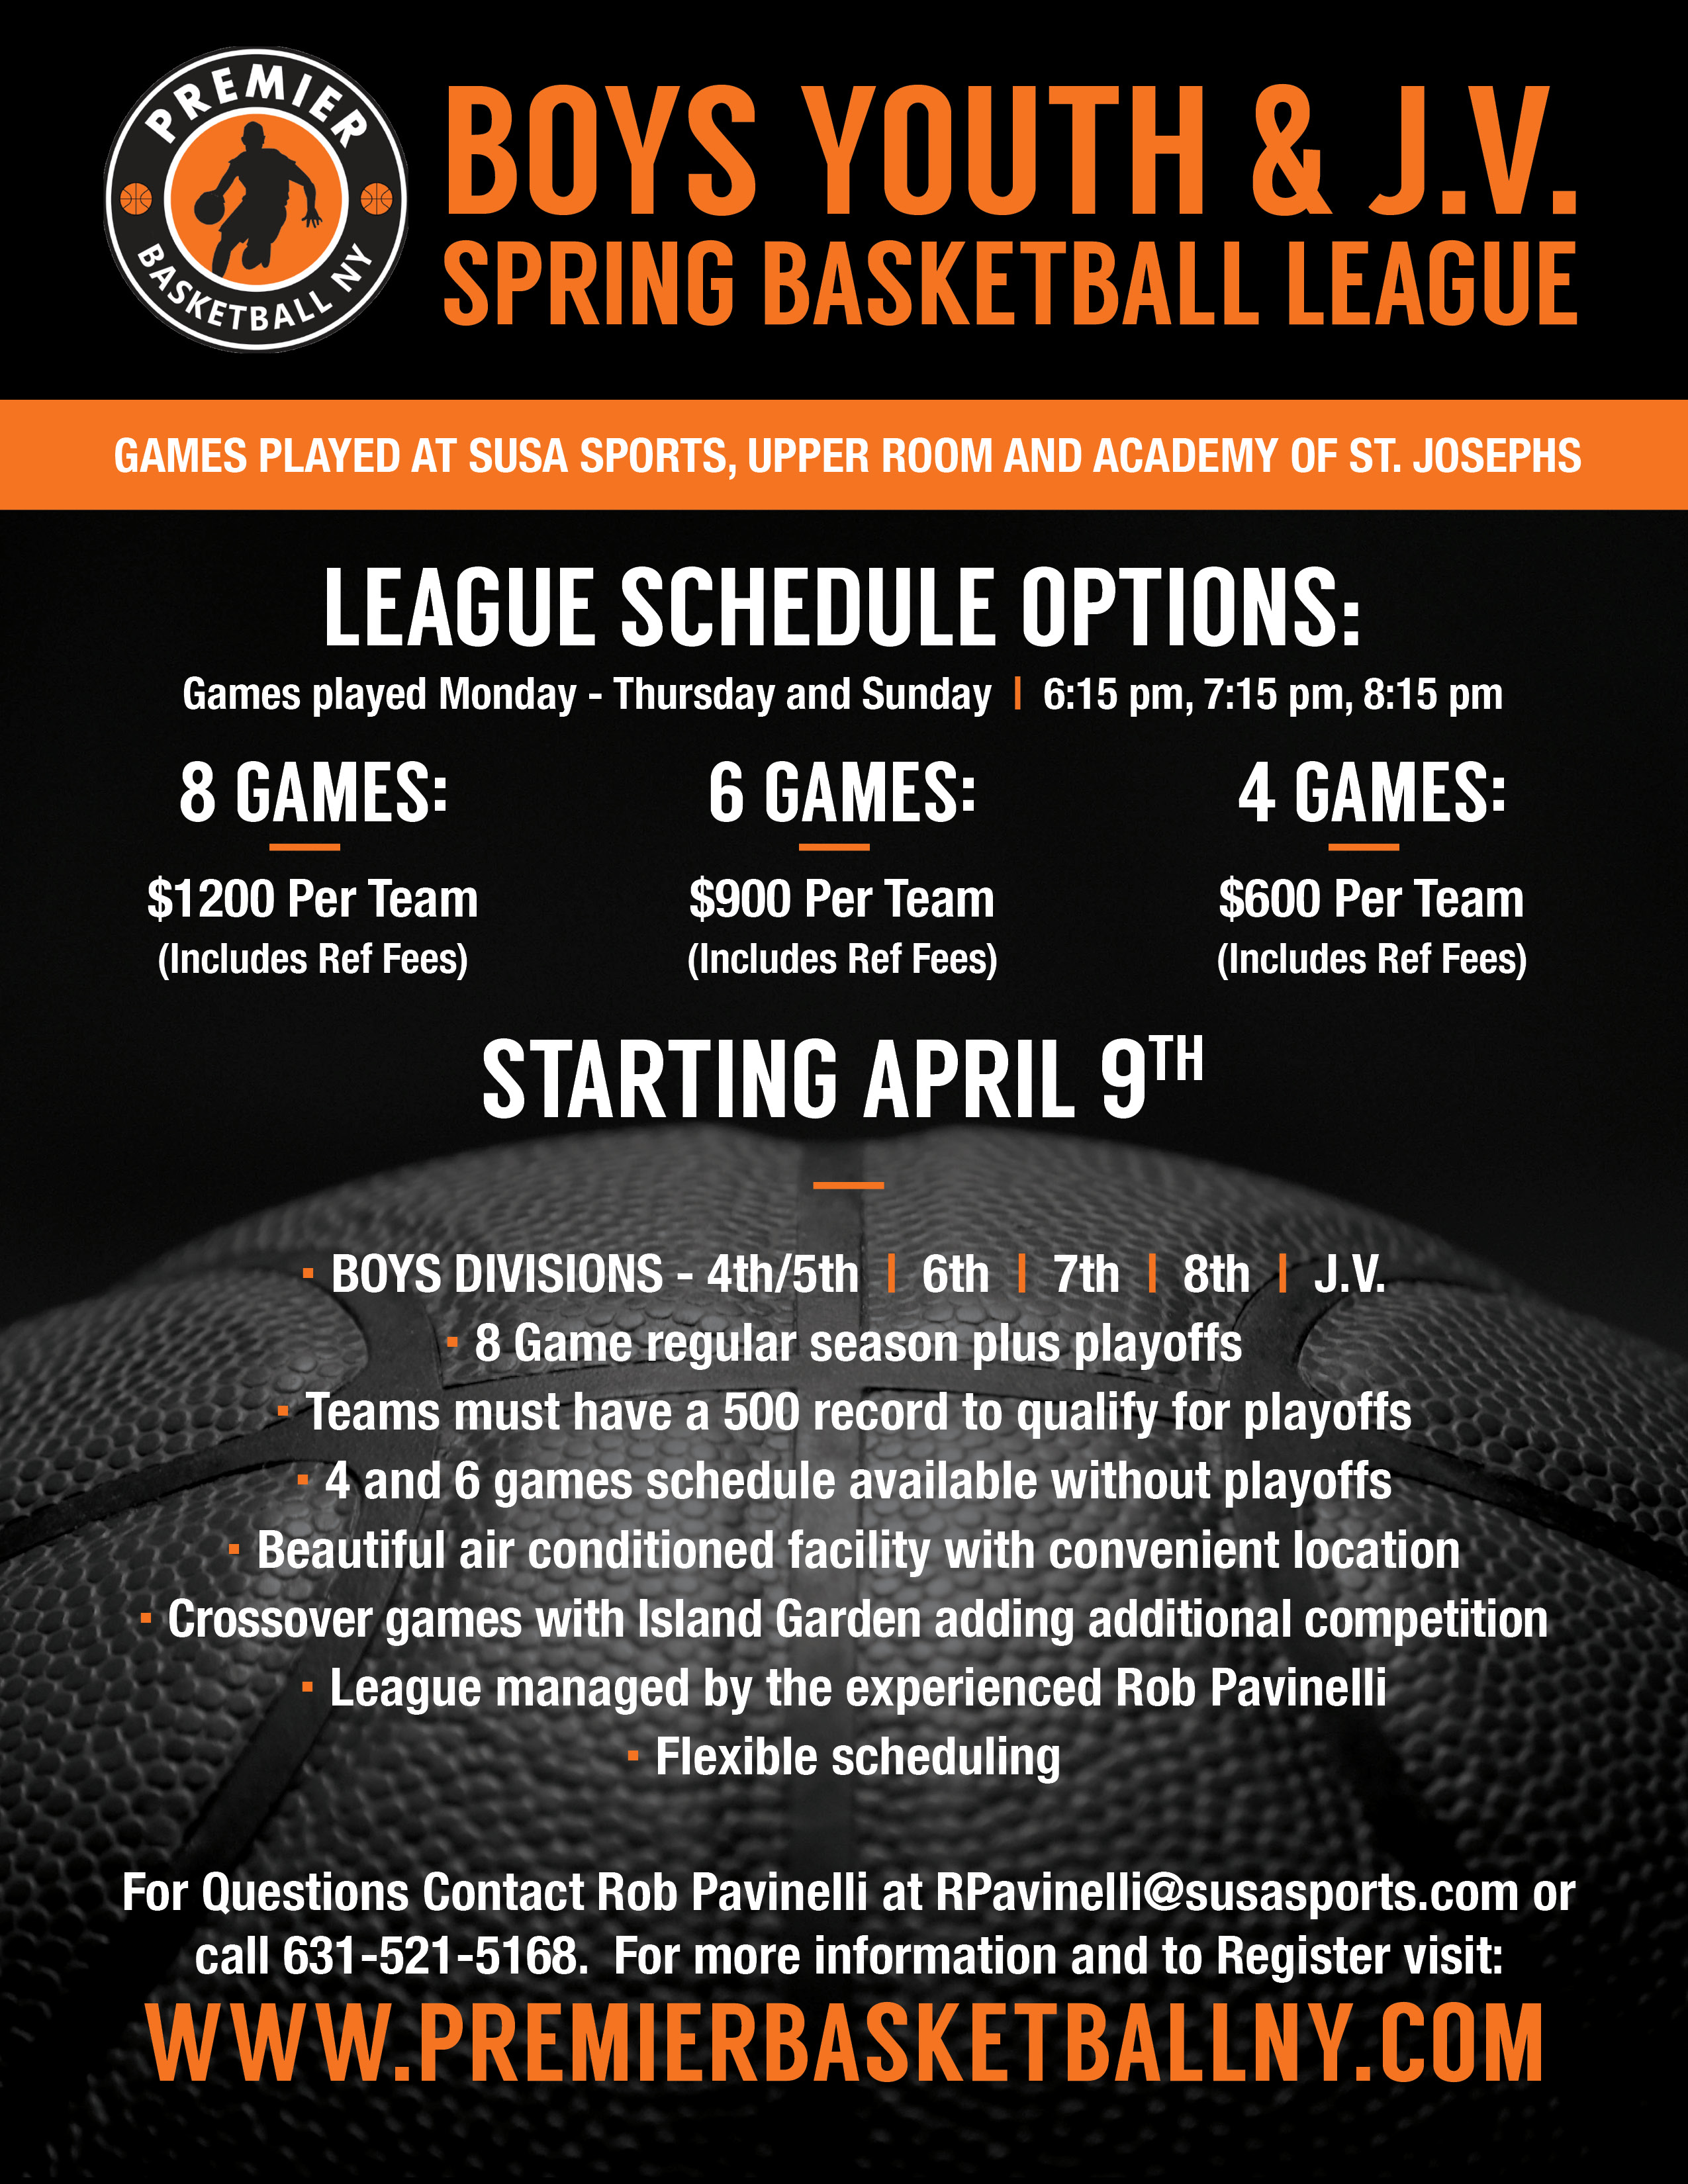 Boys Youth & J.V. Spring Basketball League Premier Basketball